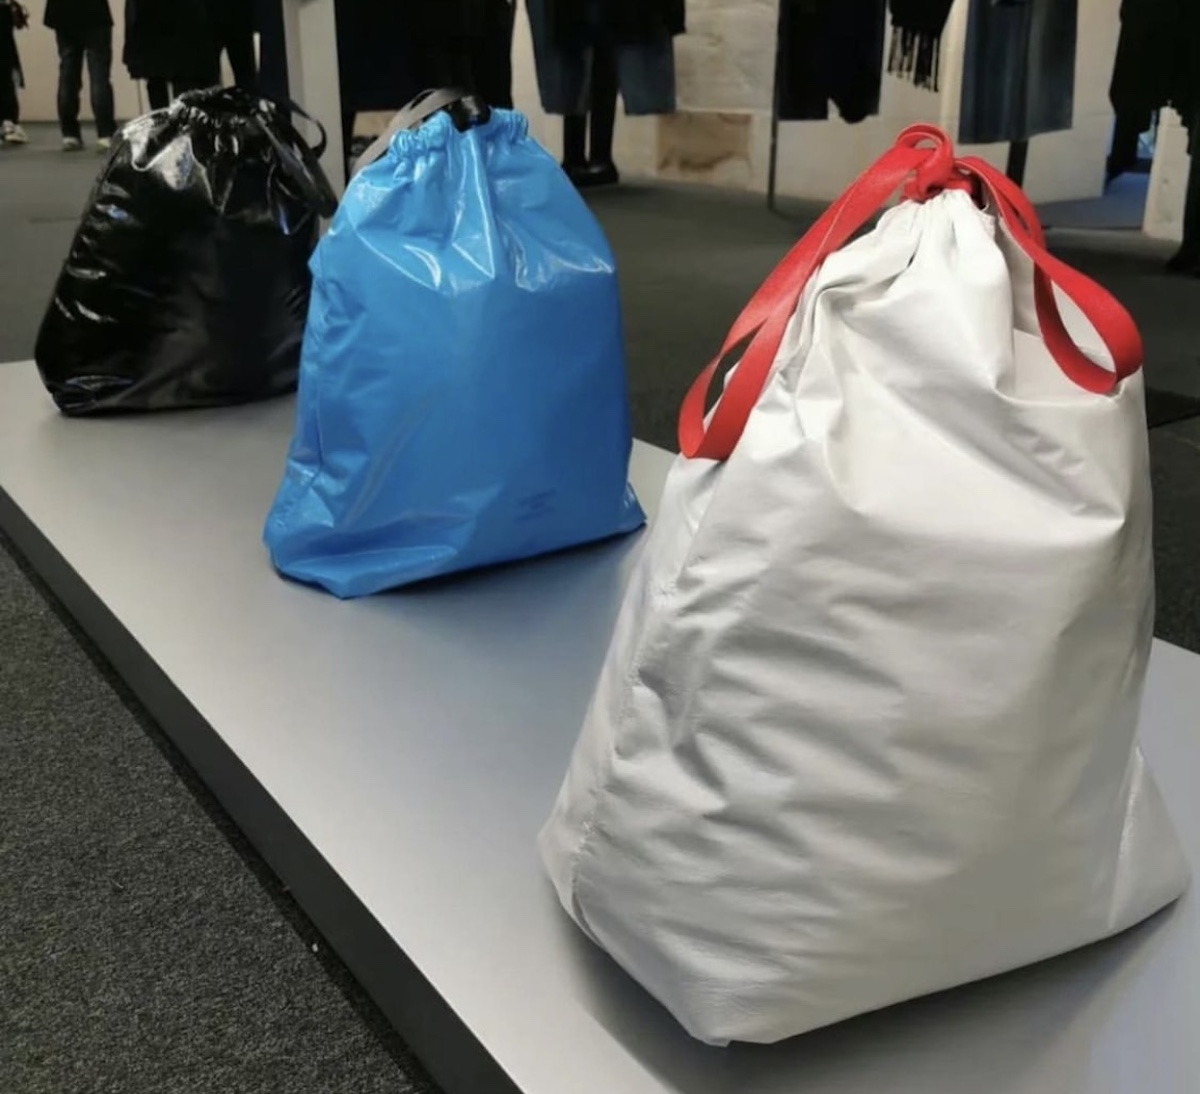 vende un bolso que imita una bolsa de basura por 1.750 | Business Insider España